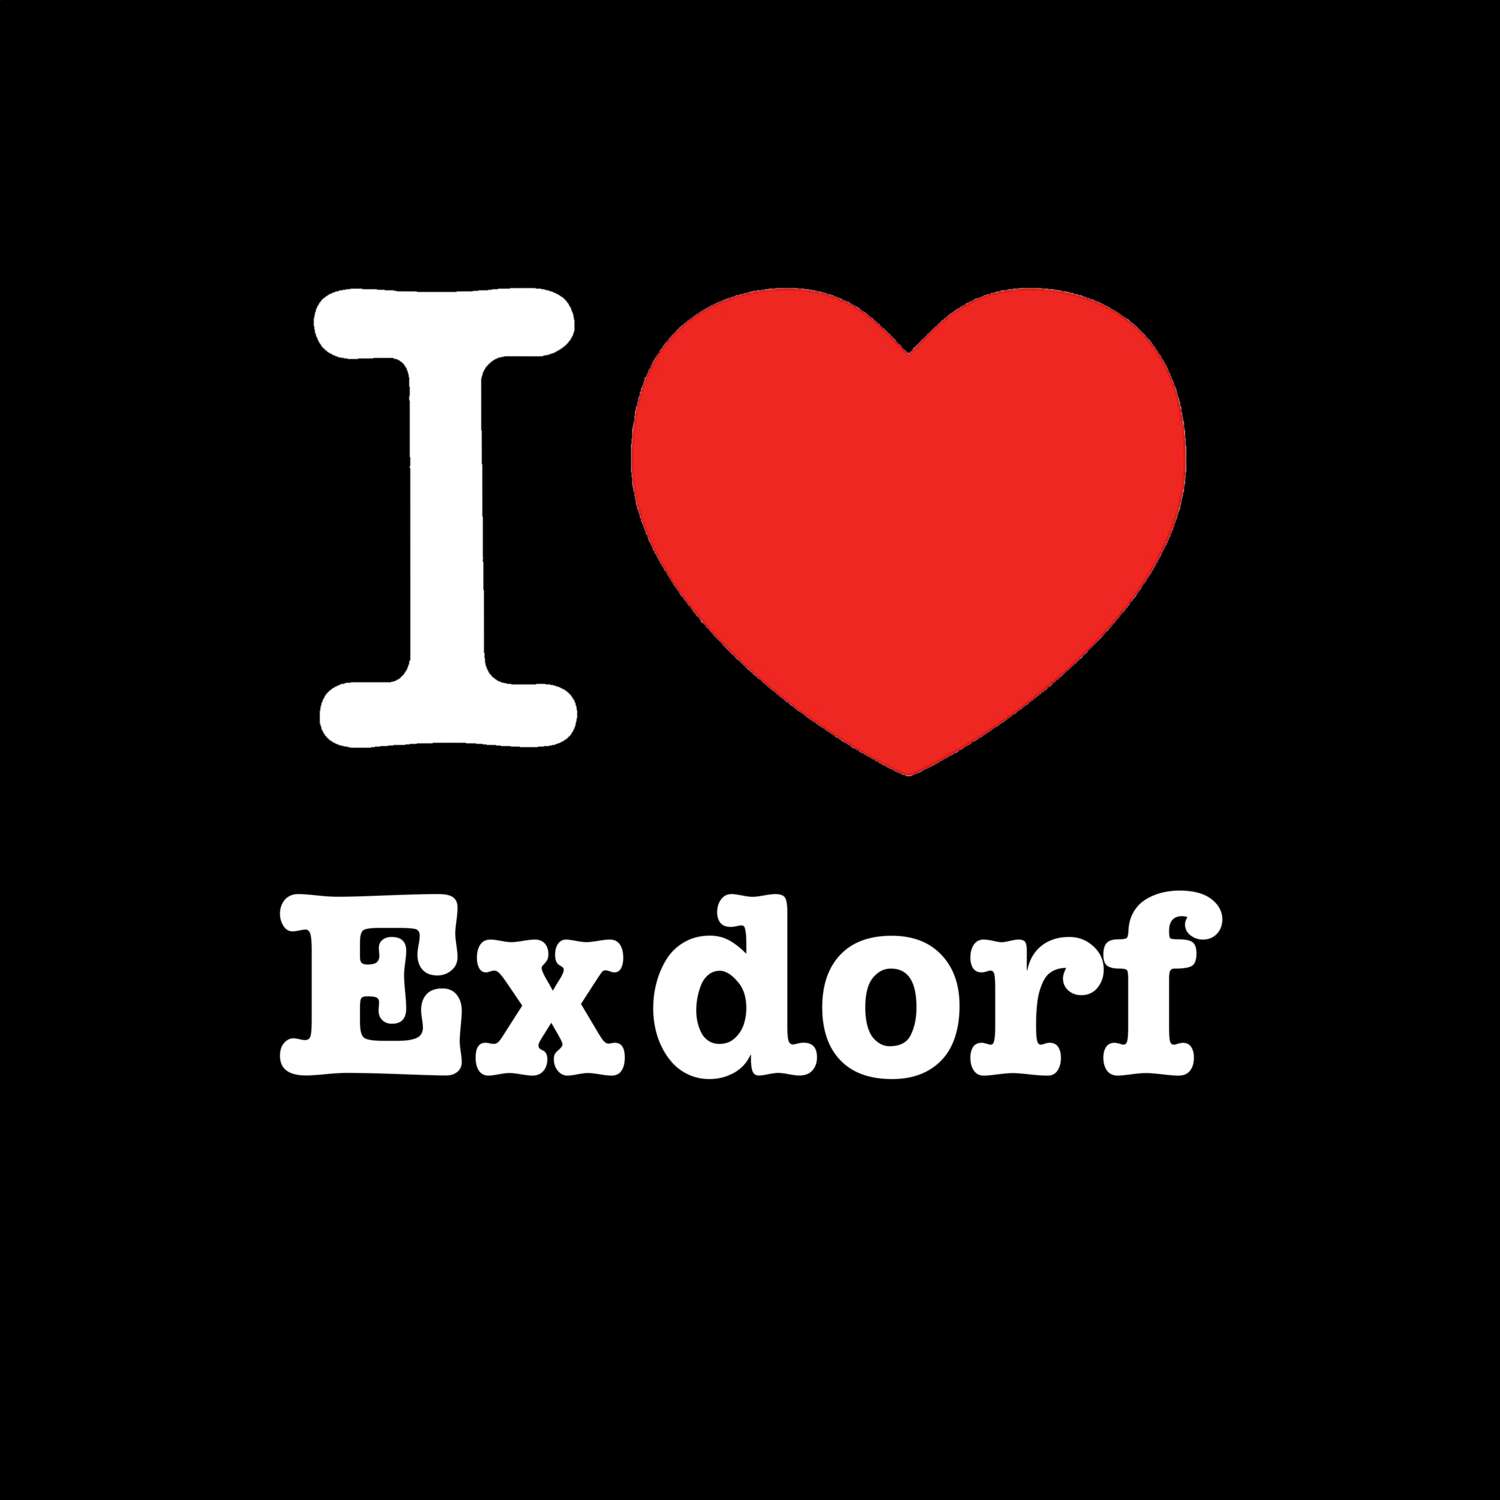 Exdorf T-Shirt »I love«